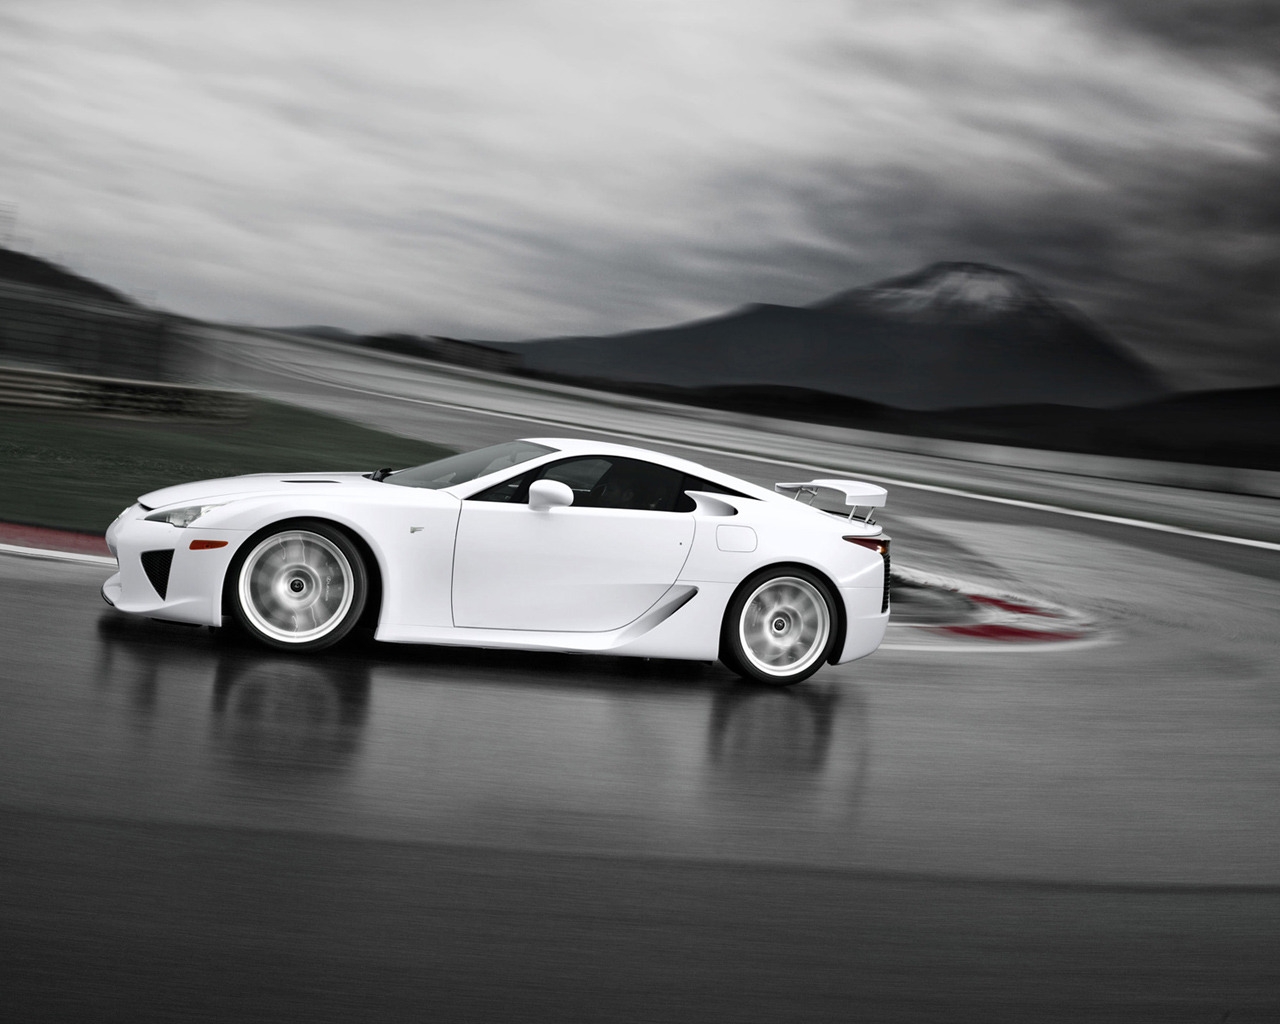 Lexus LFA White Side Angle Speed for 1280 x 1024 resolution